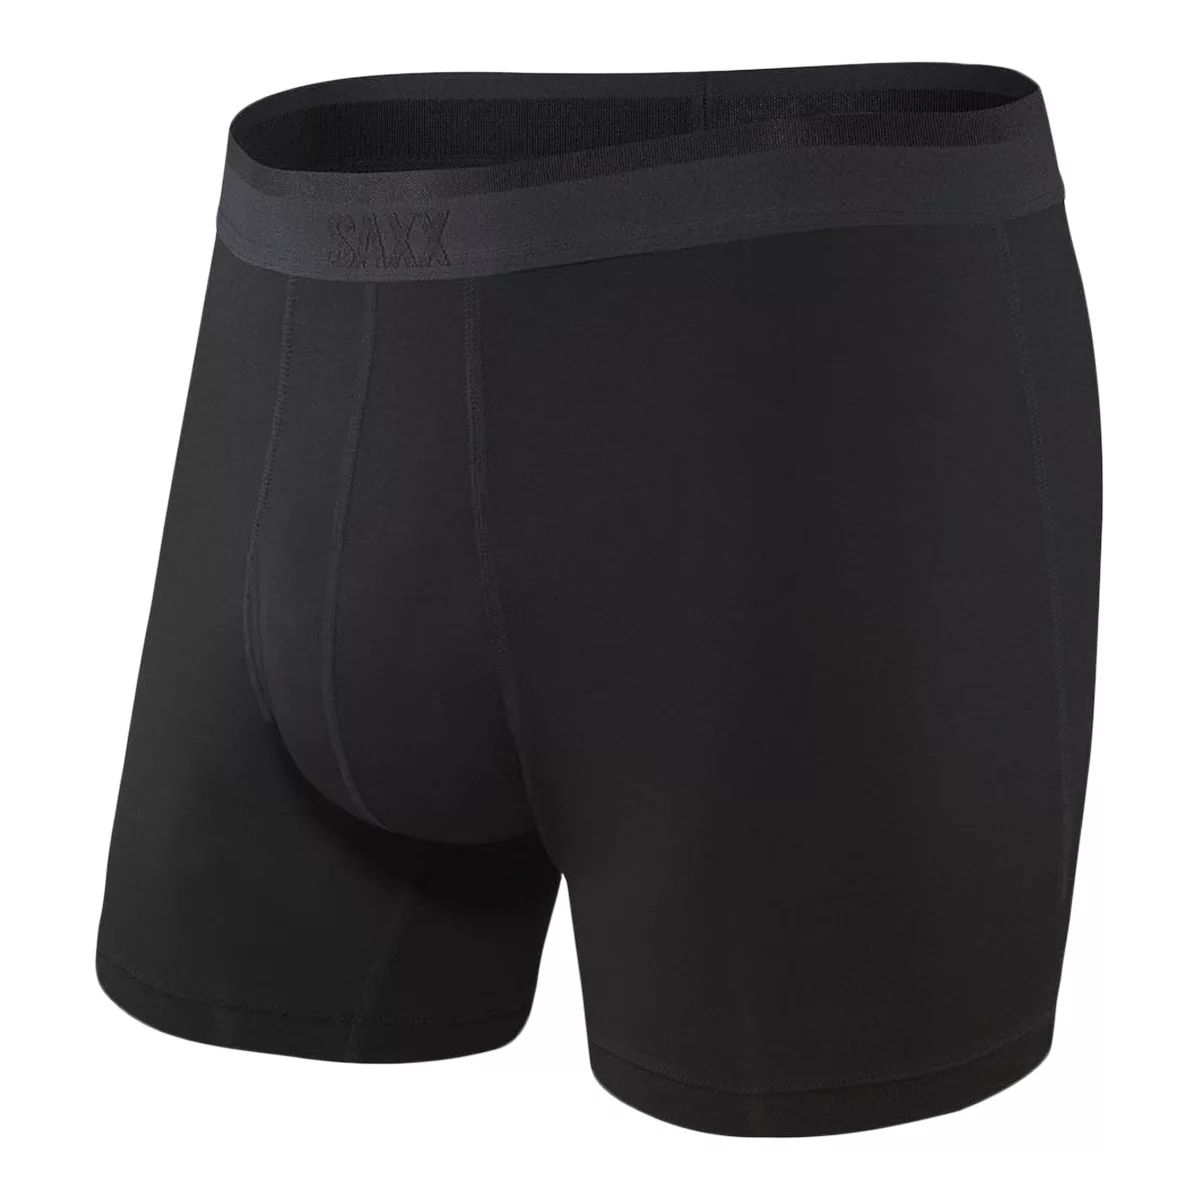 SAXX Pro Elite Boxer Underwear